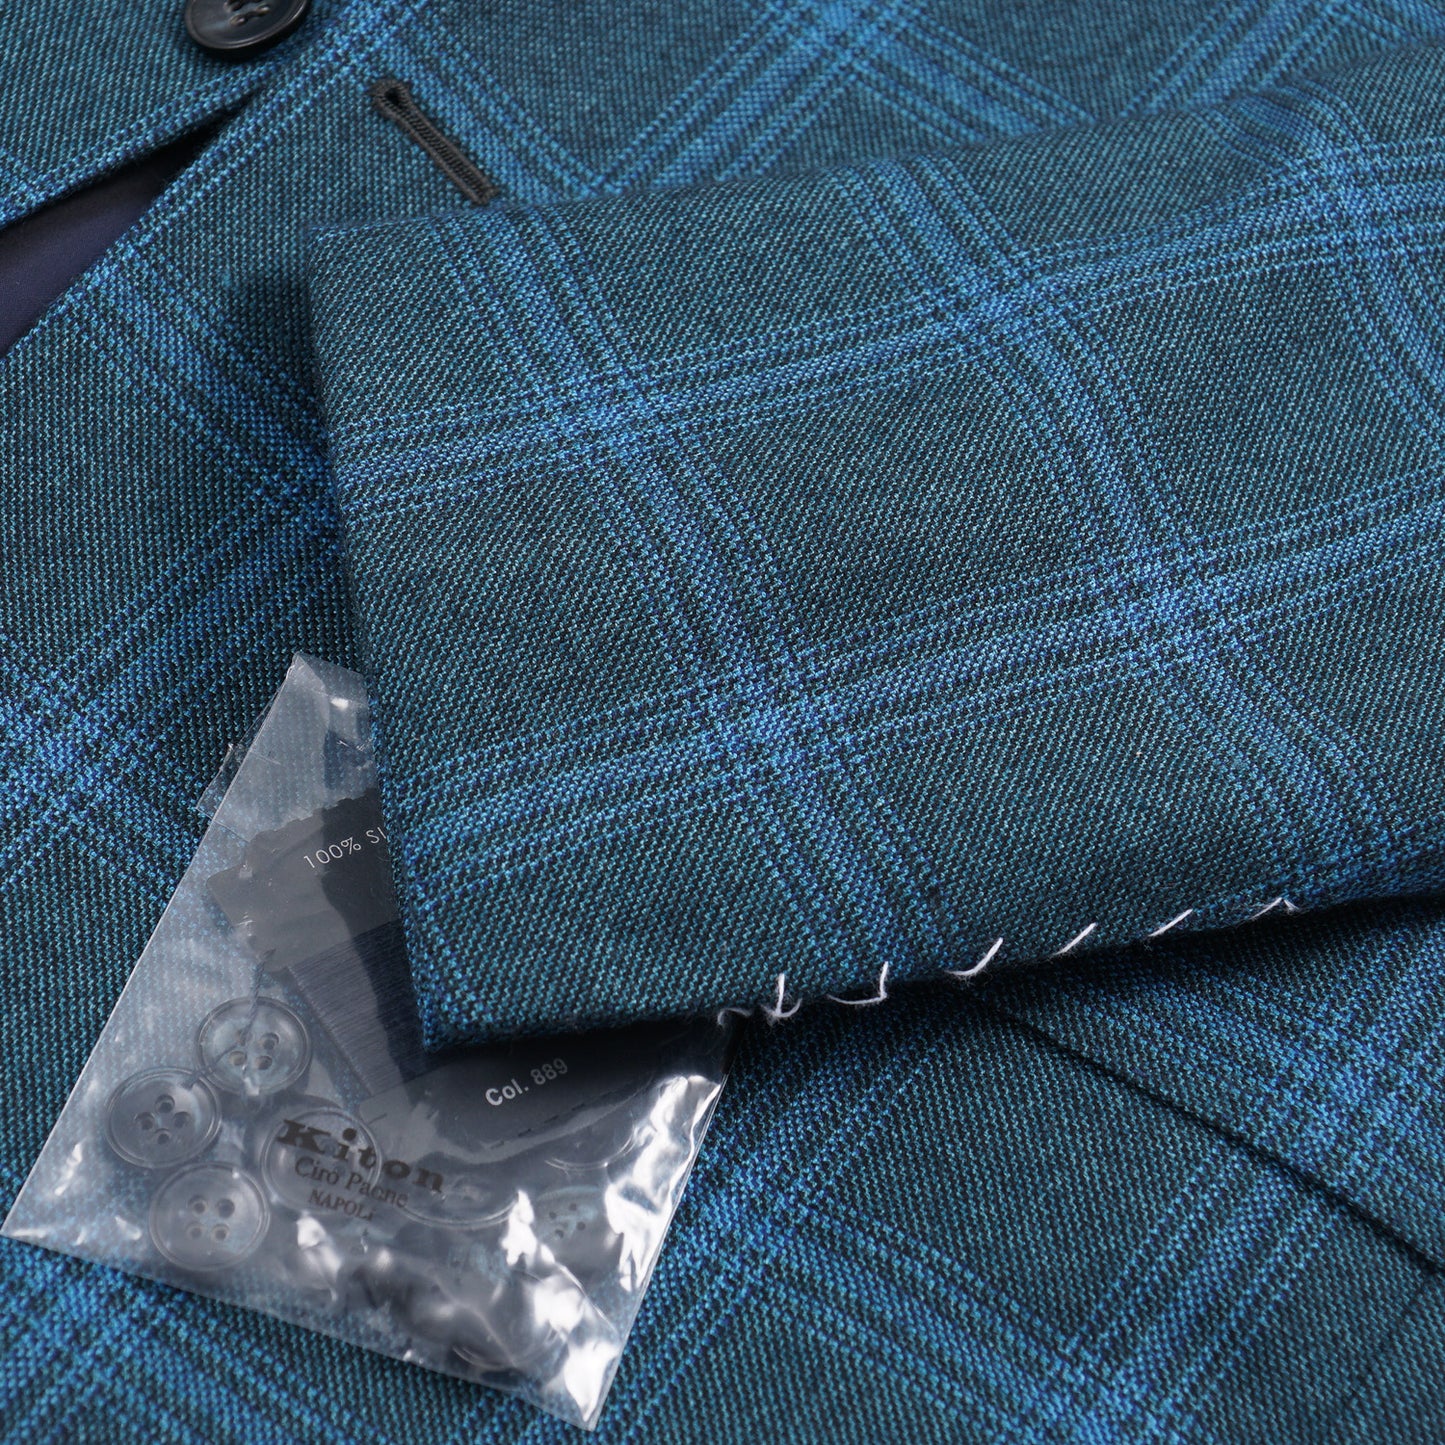 Kiton Check Cashmere Sport Coat - Top Shelf Apparel